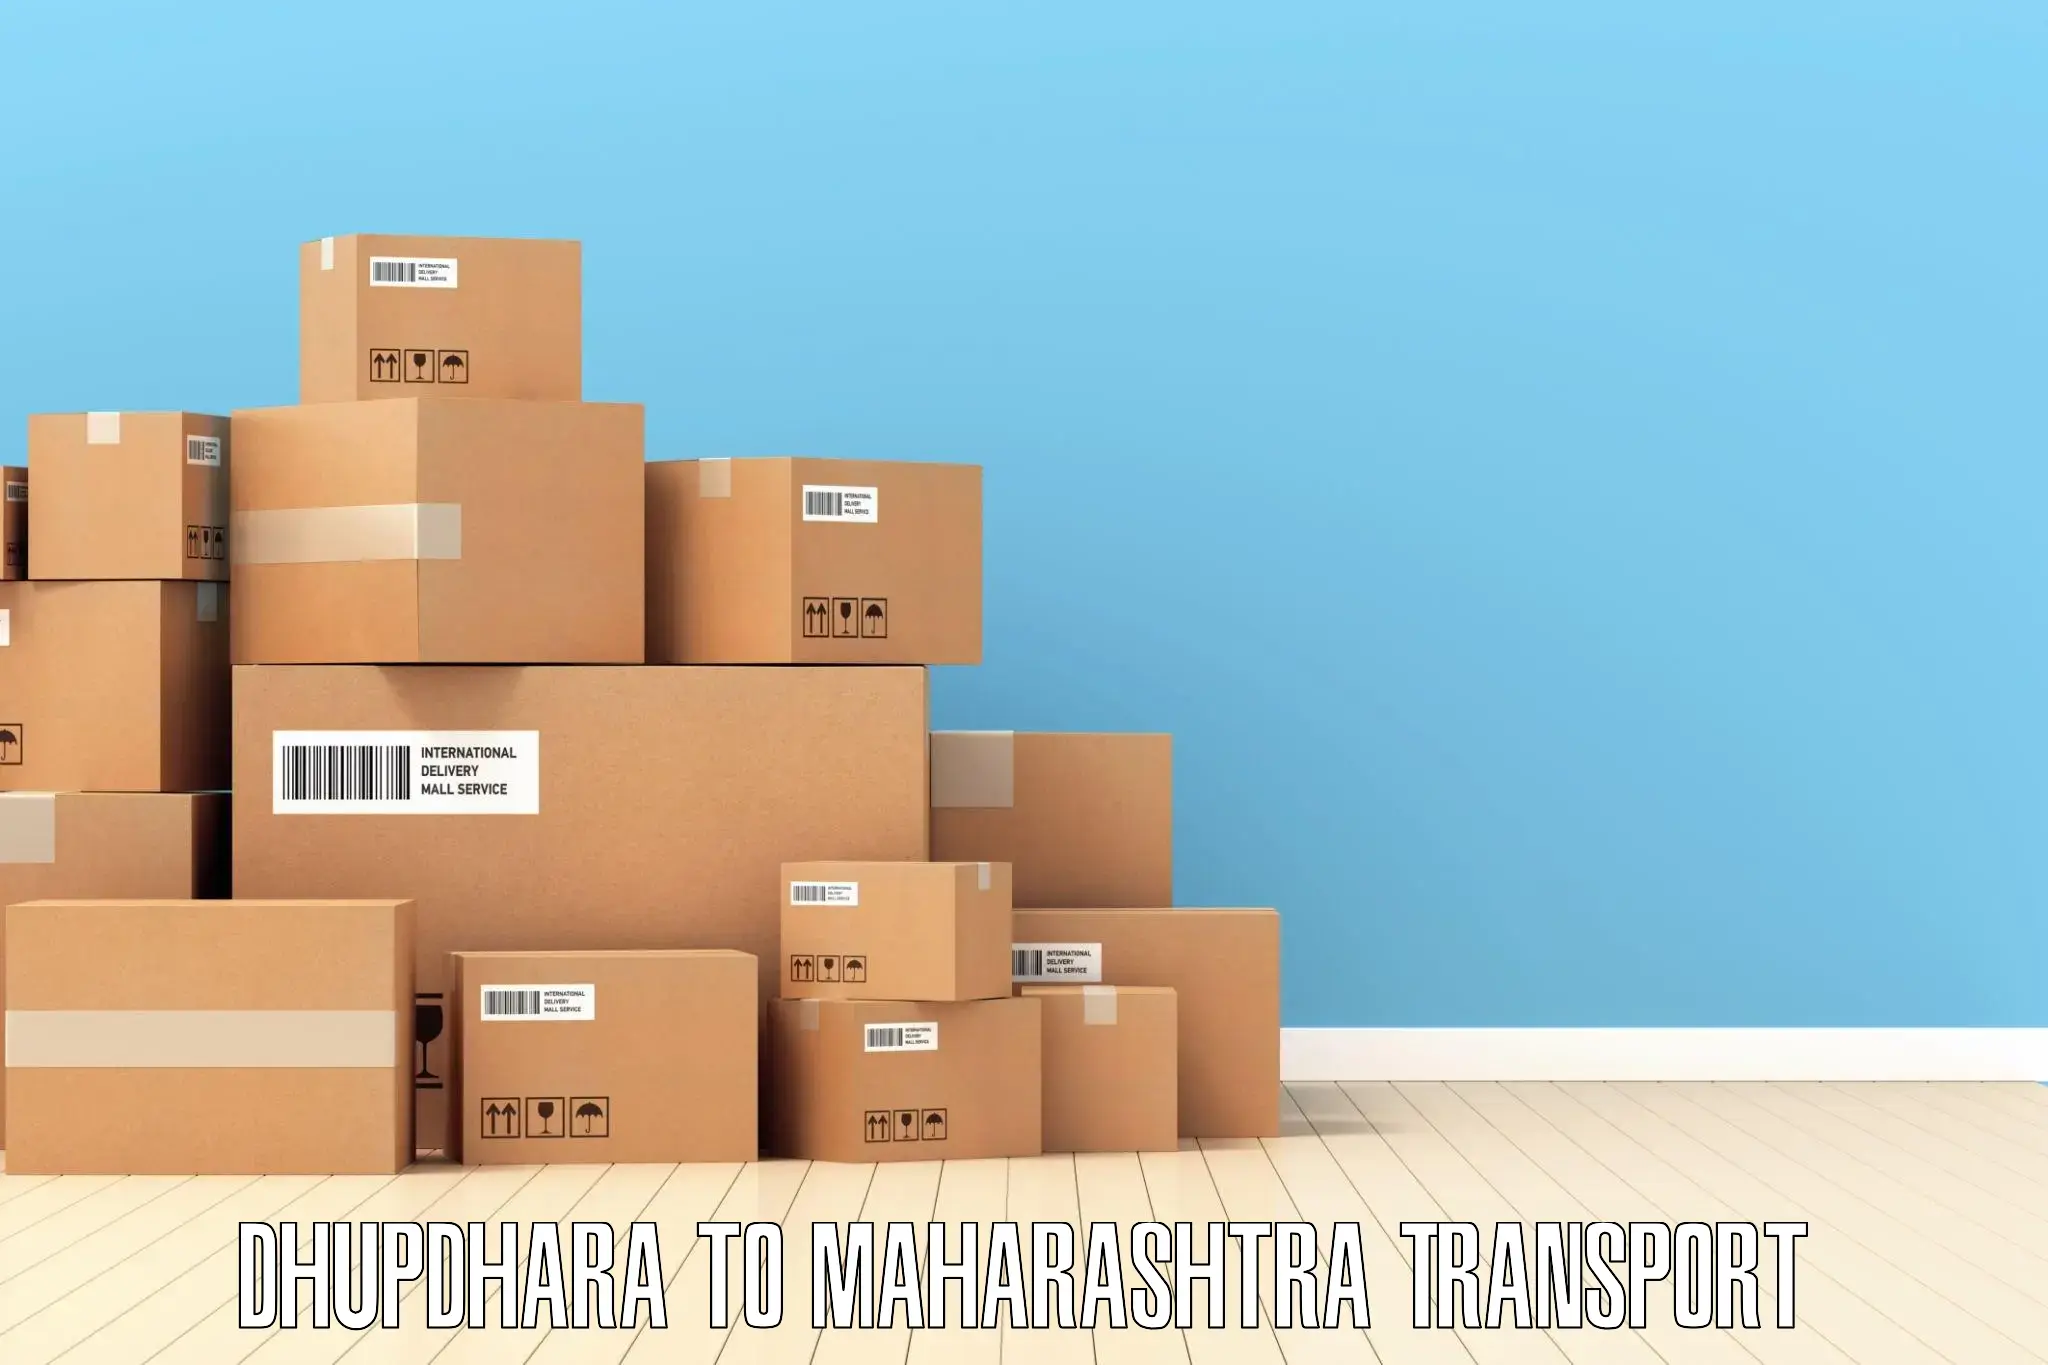 India truck logistics services Dhupdhara to Karmala